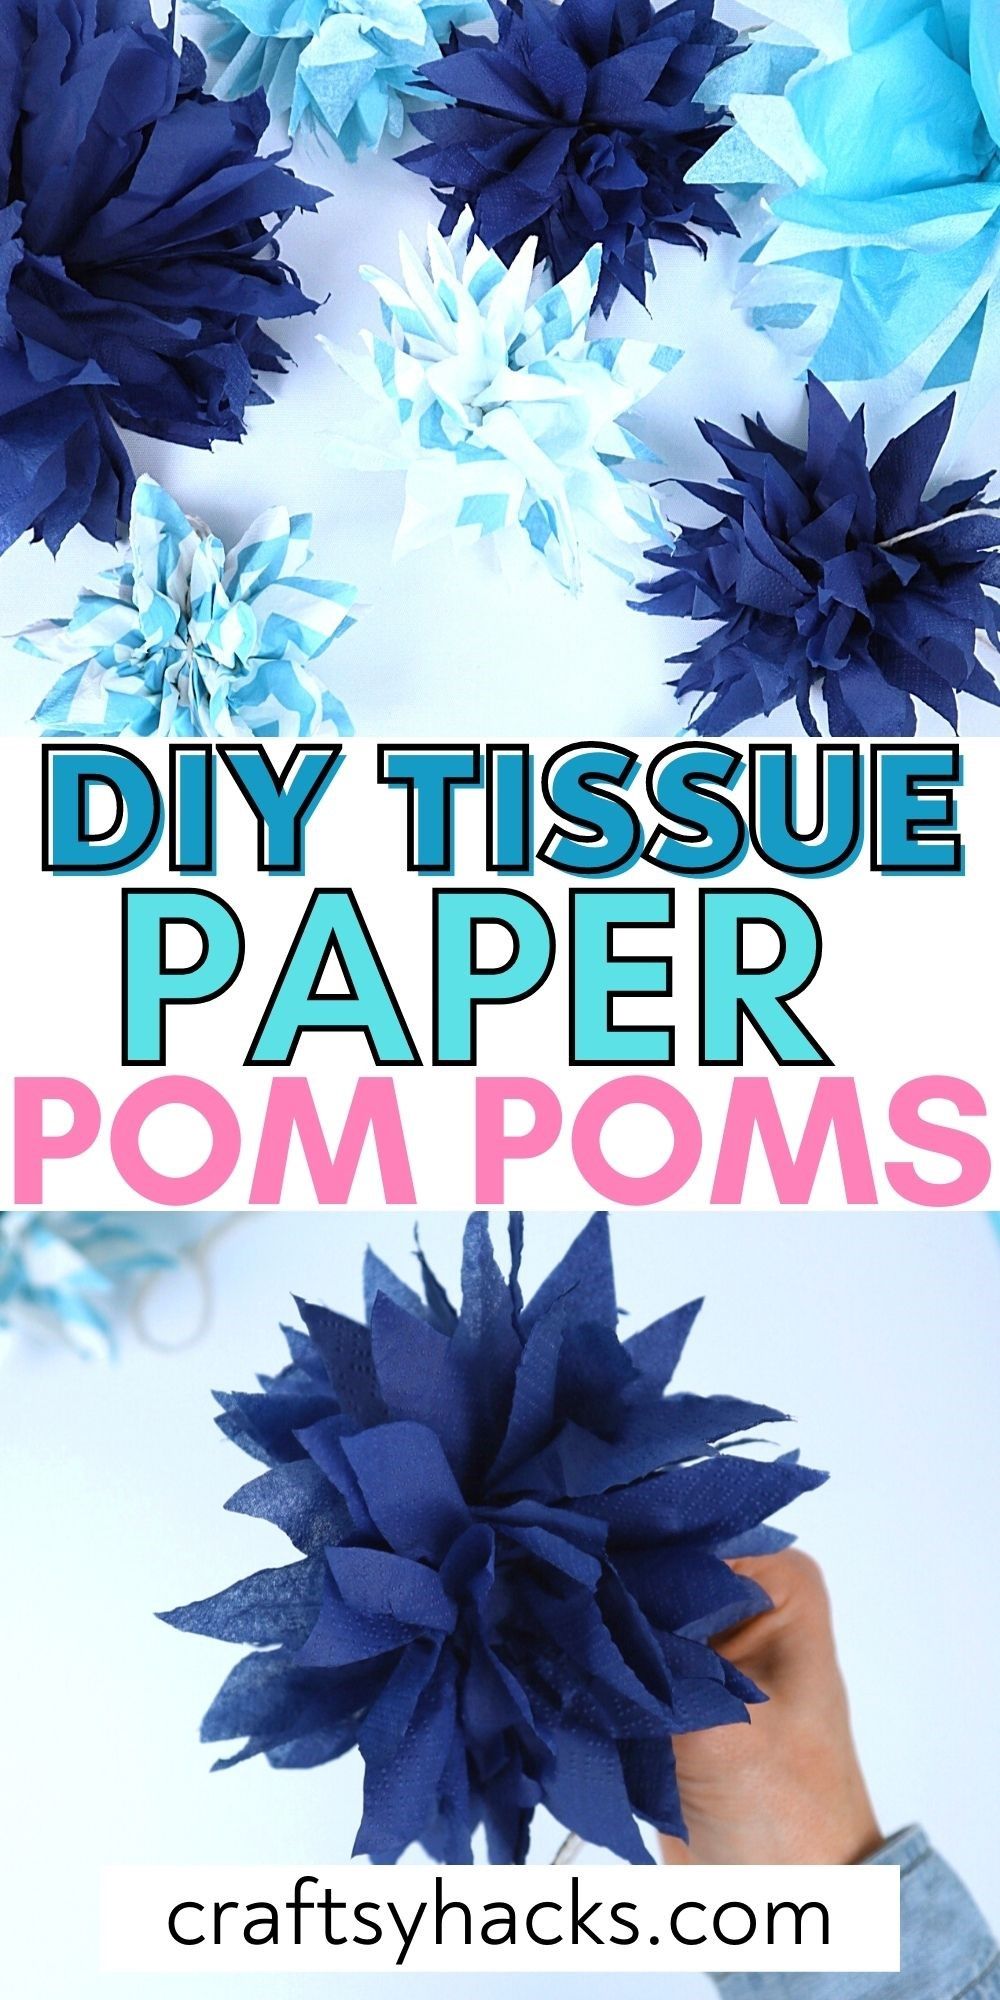 DIY tissue paper pom poms